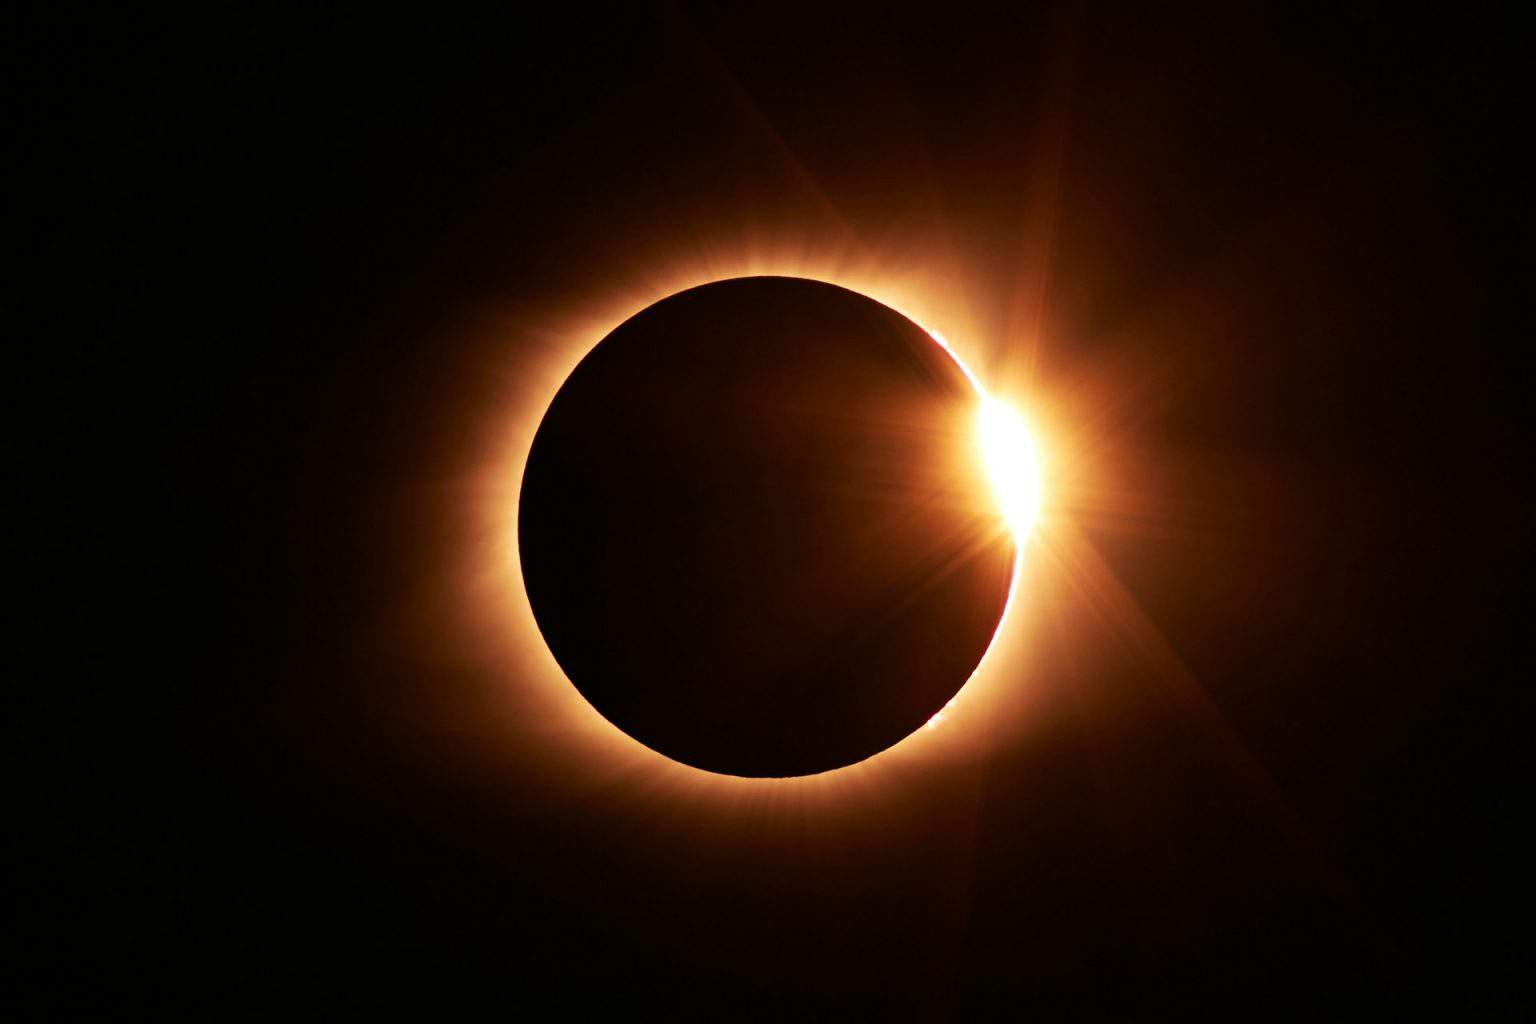 Eclipse solar total e chuva de meteoros: O CALENDÁRIO ASTRONÔMICO DE ABRIL